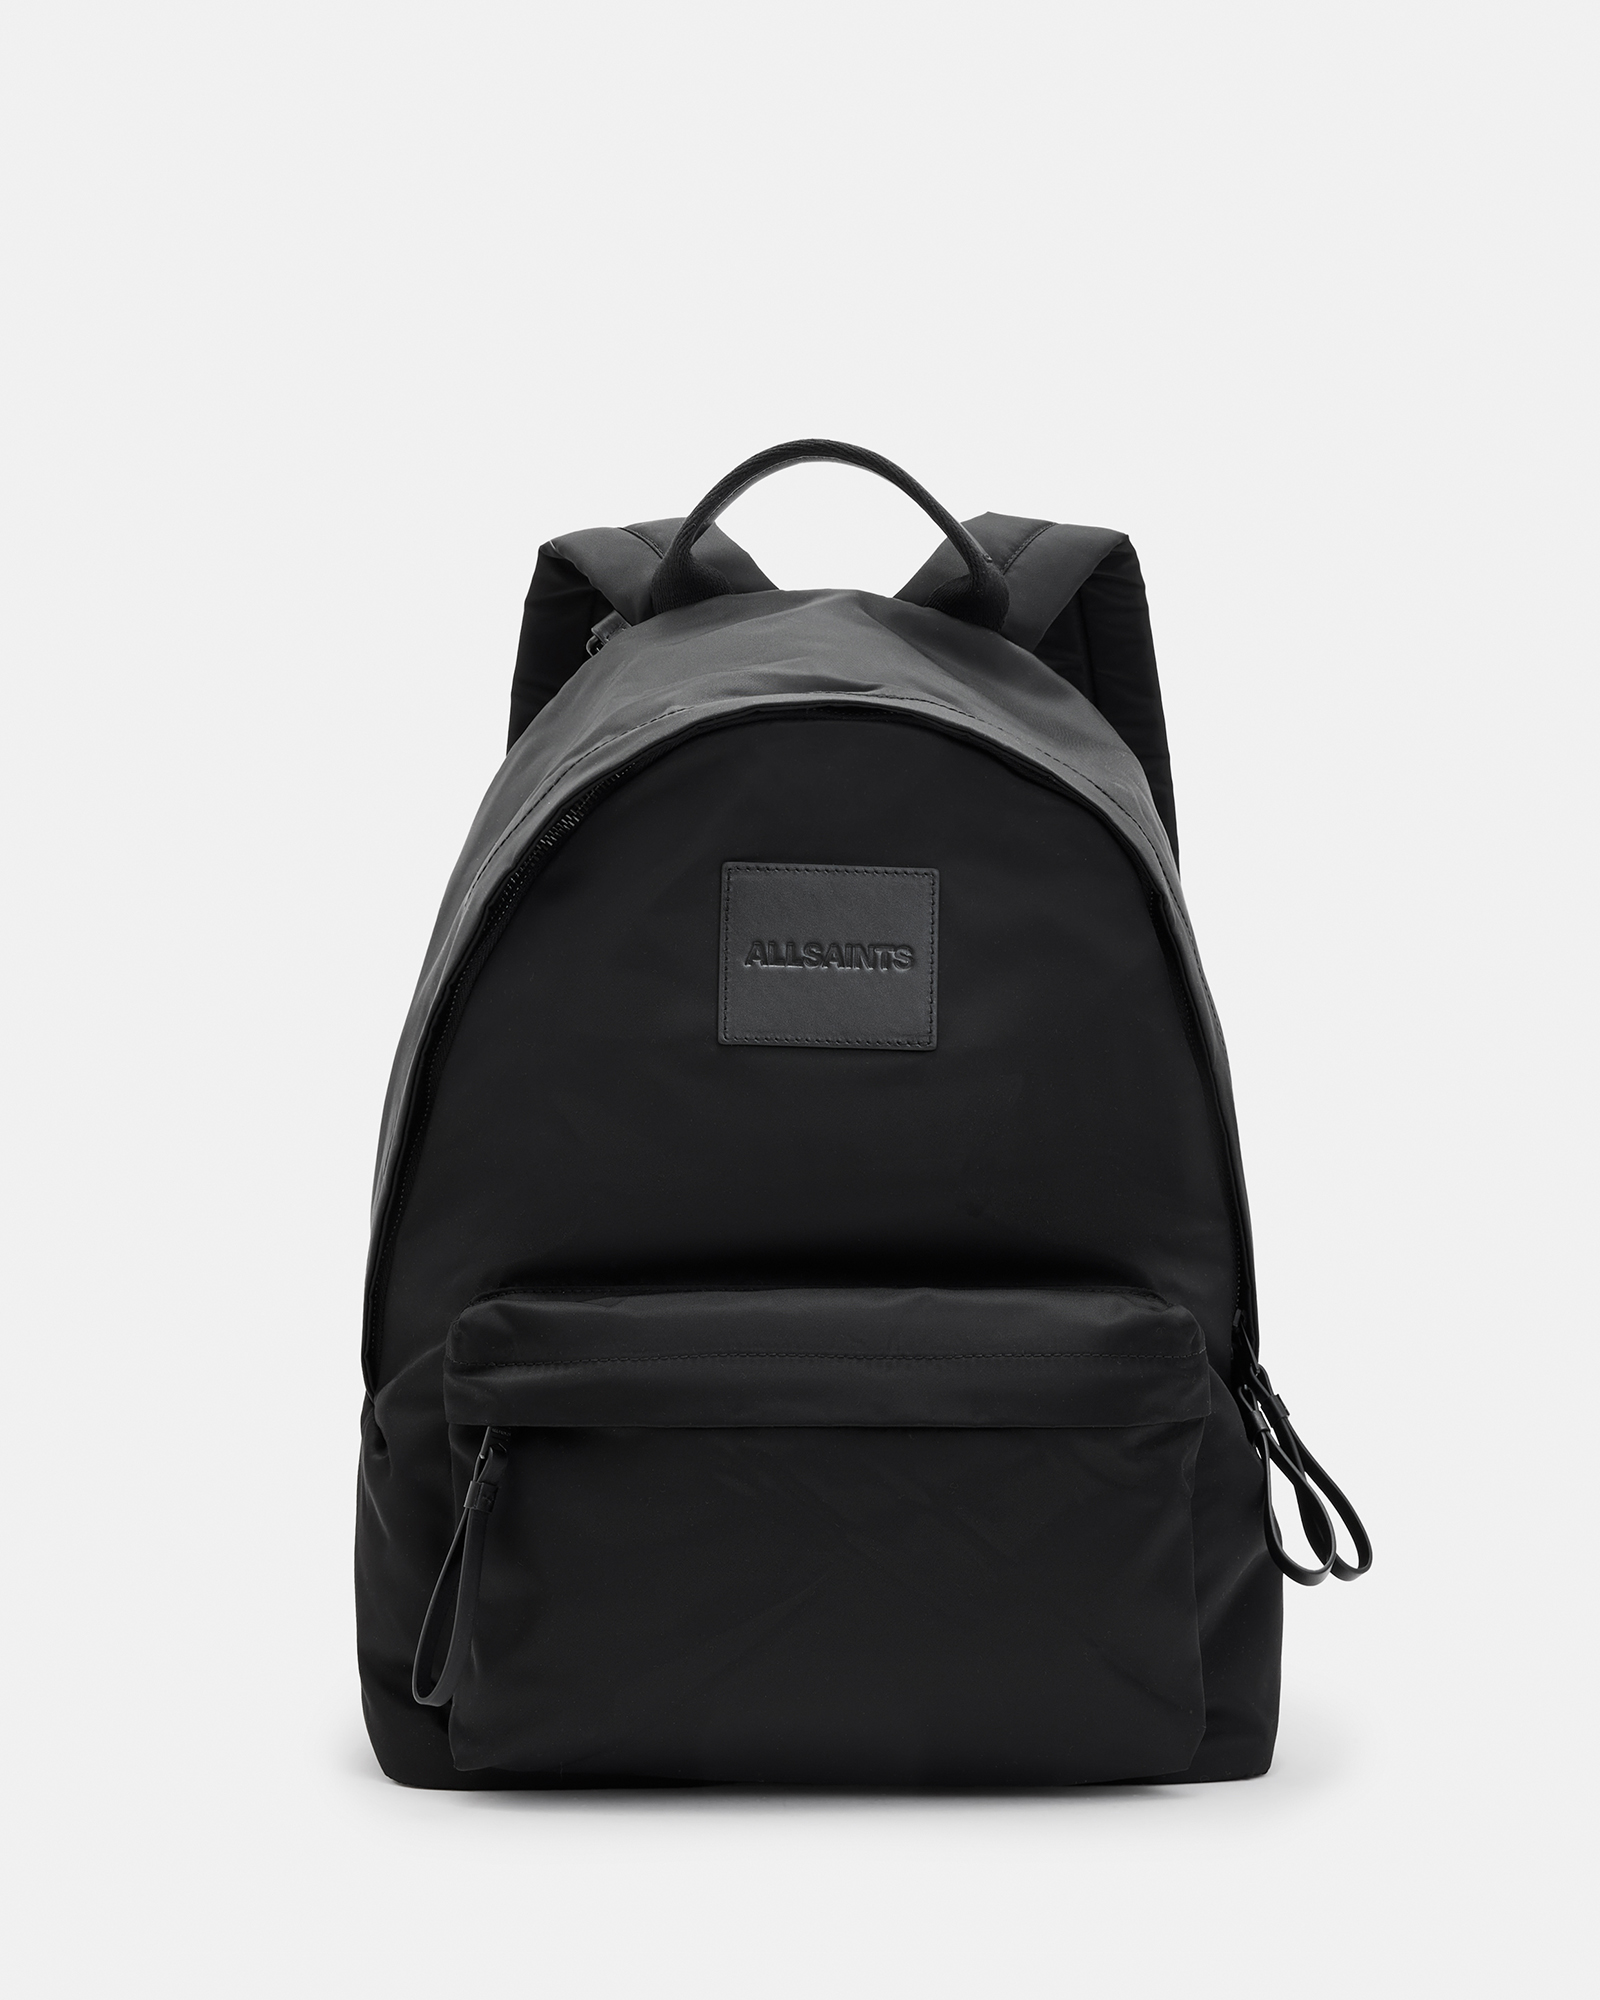 AllSaints Carabiner Recycled Backpack,, Black